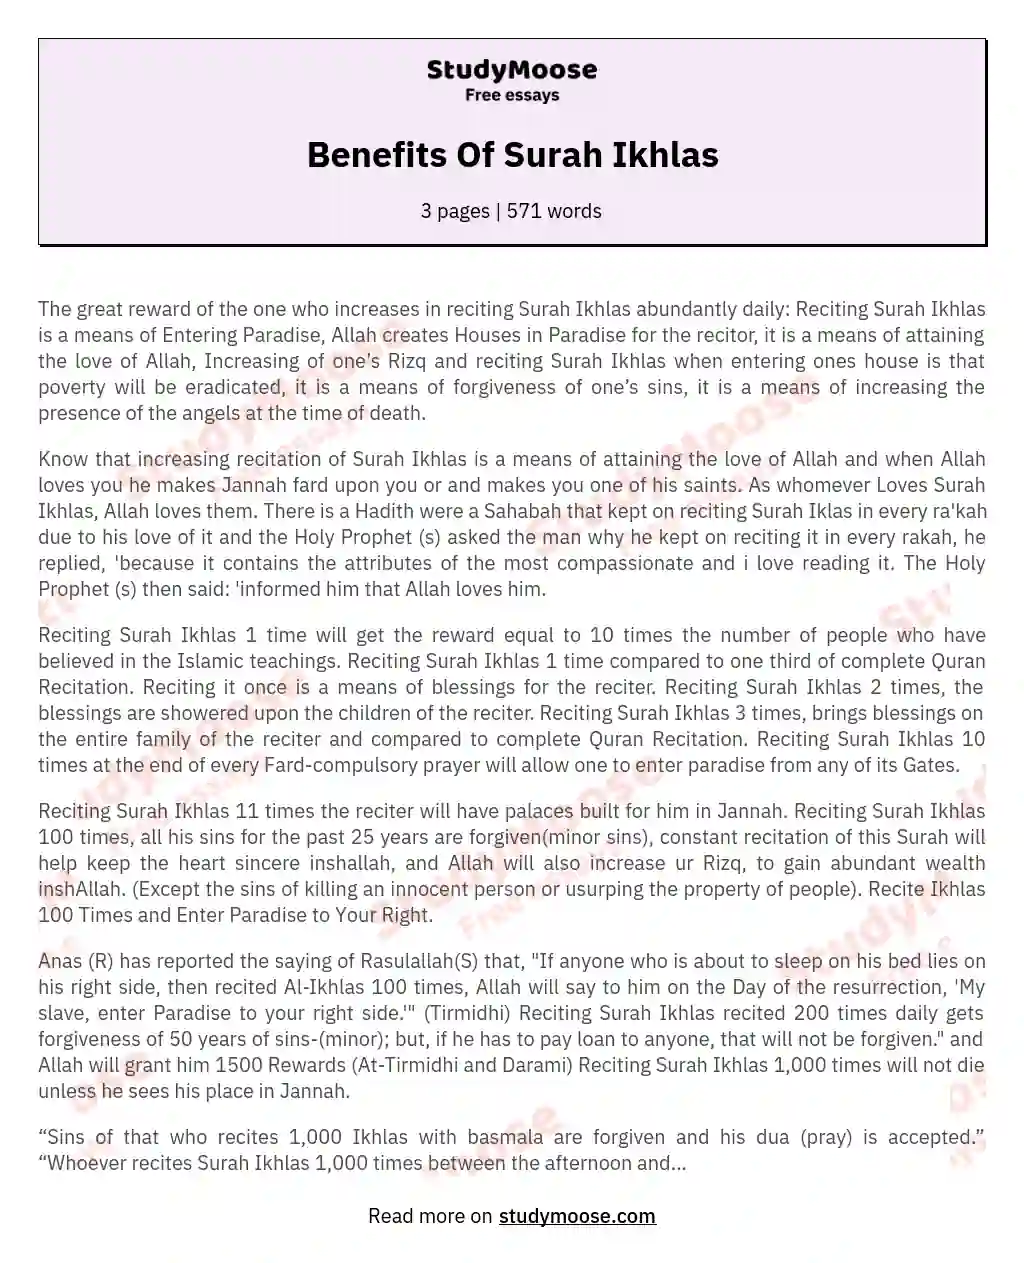 Benefits Of Surah Ikhlas essay